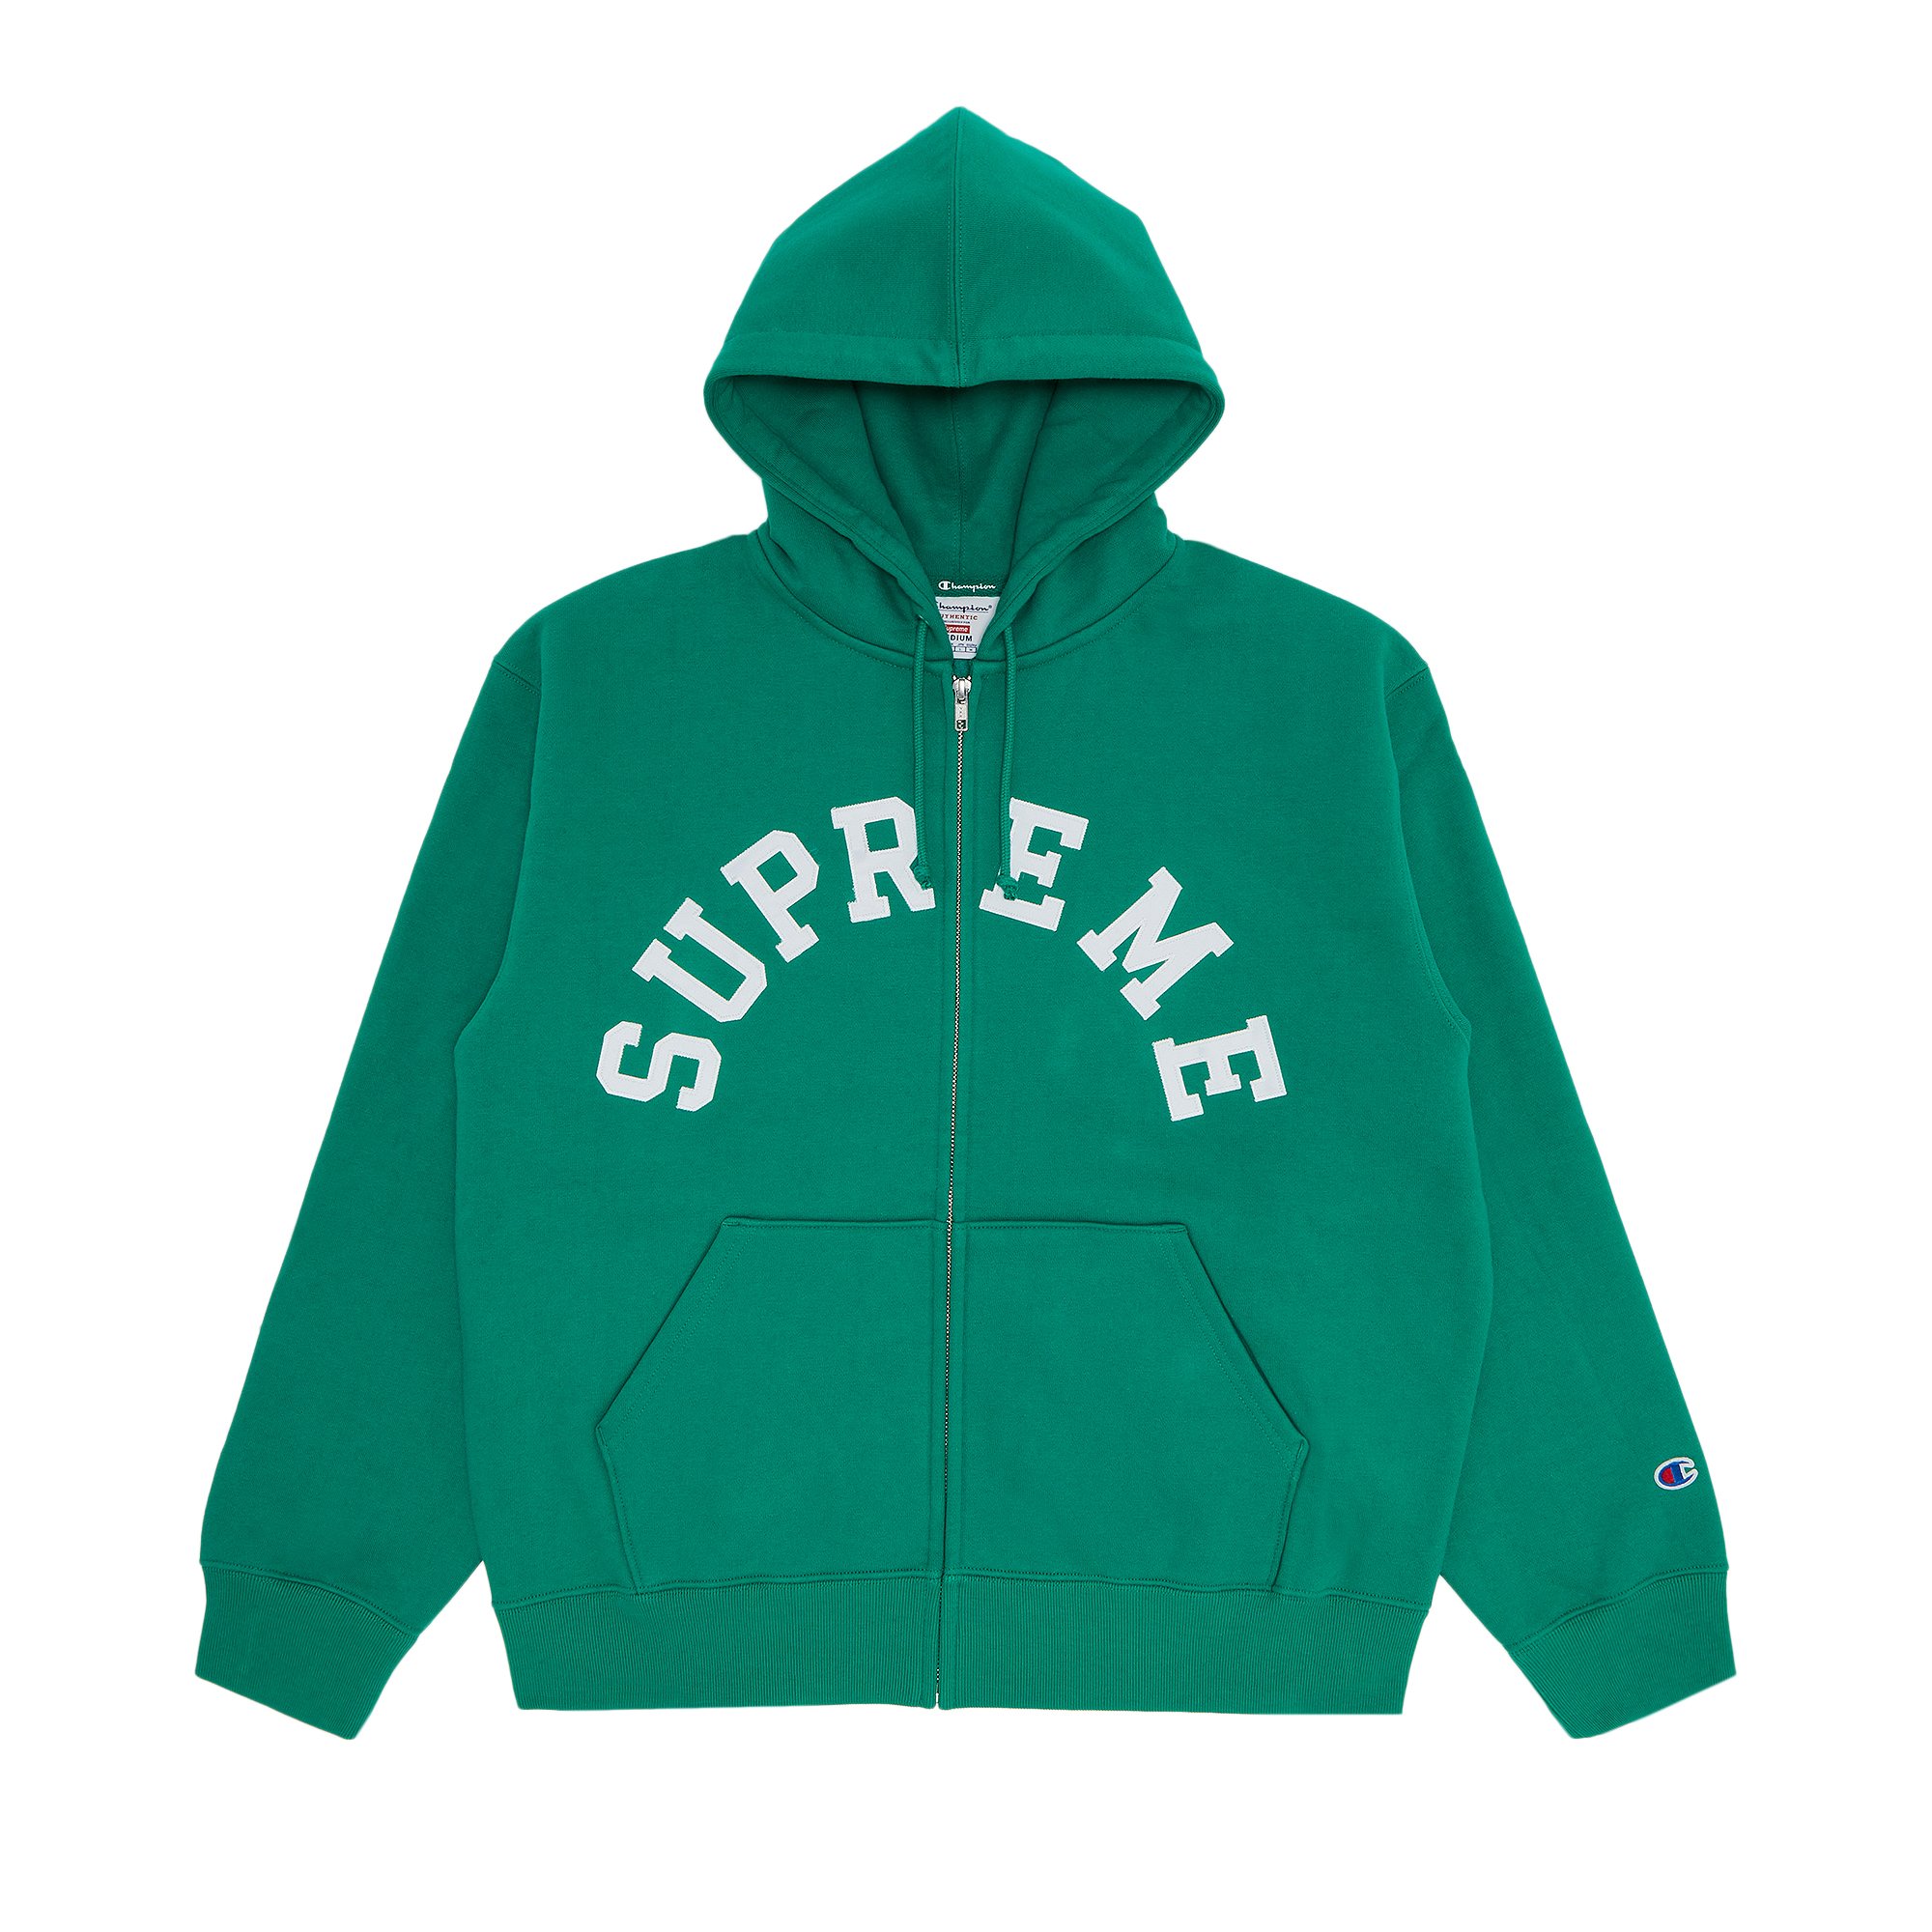 Supreme x Champion Zip Up Hooded Sweatshirt 'Green'